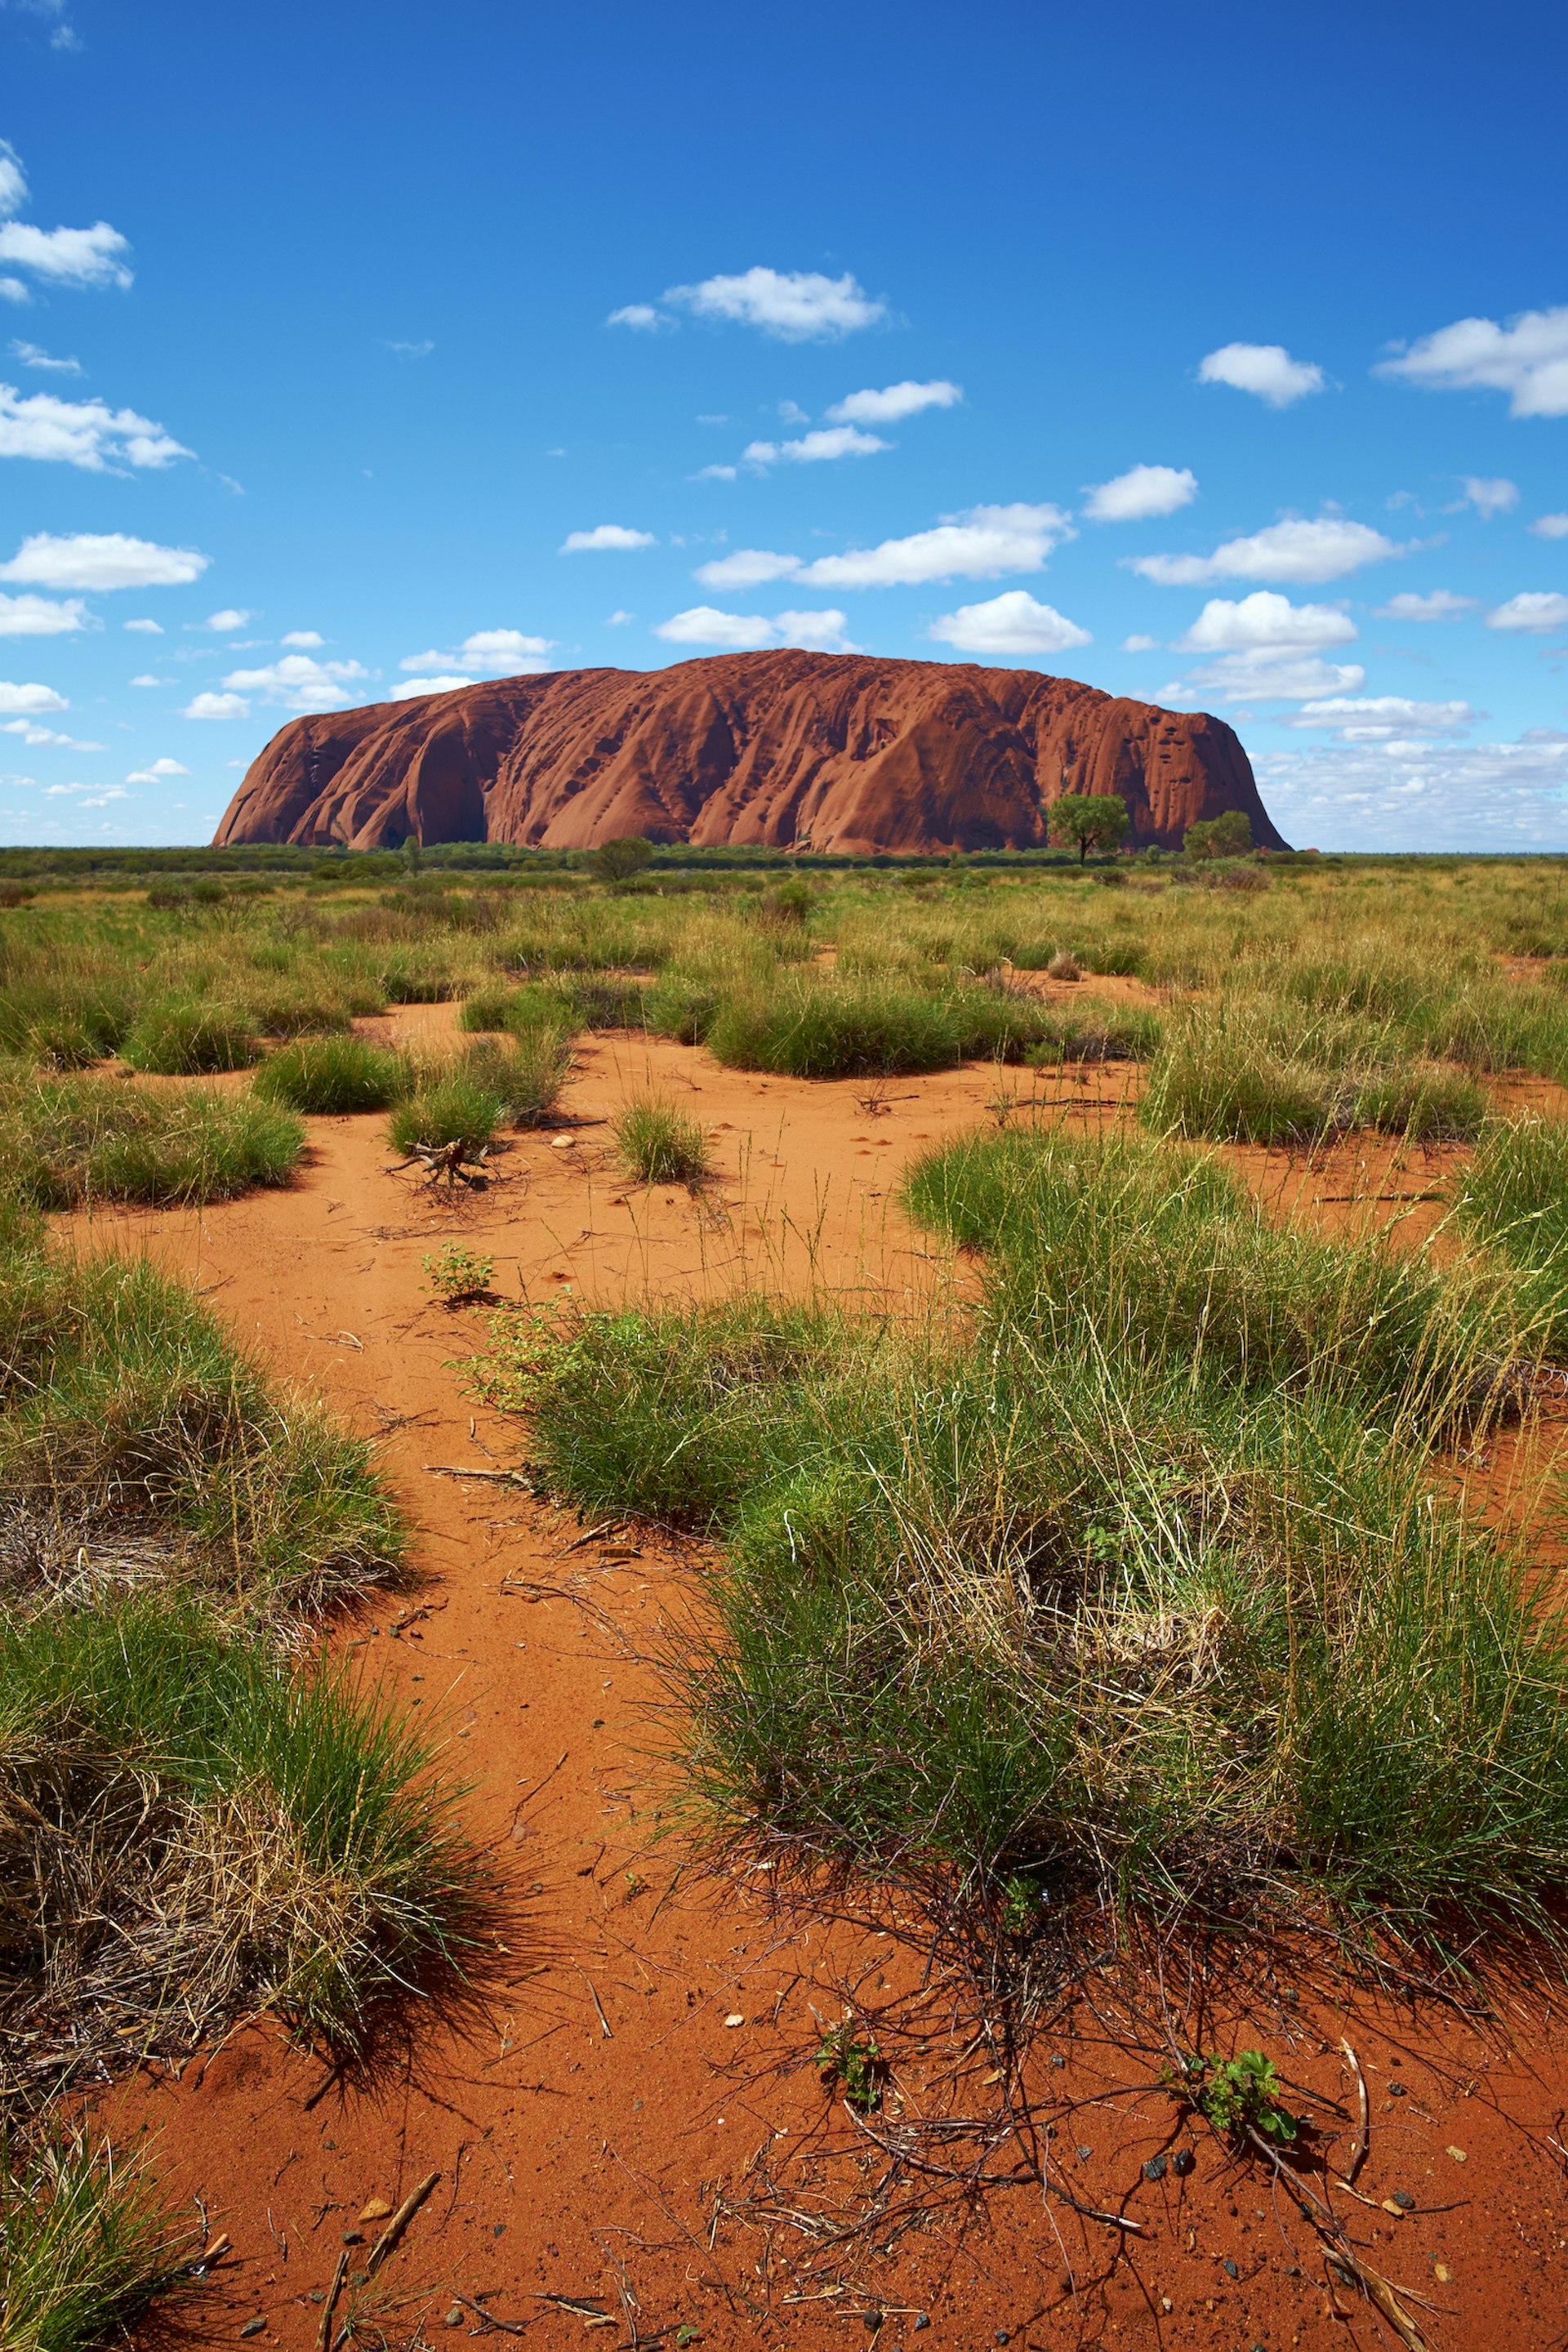 Uluru, Australia, seen from a distance